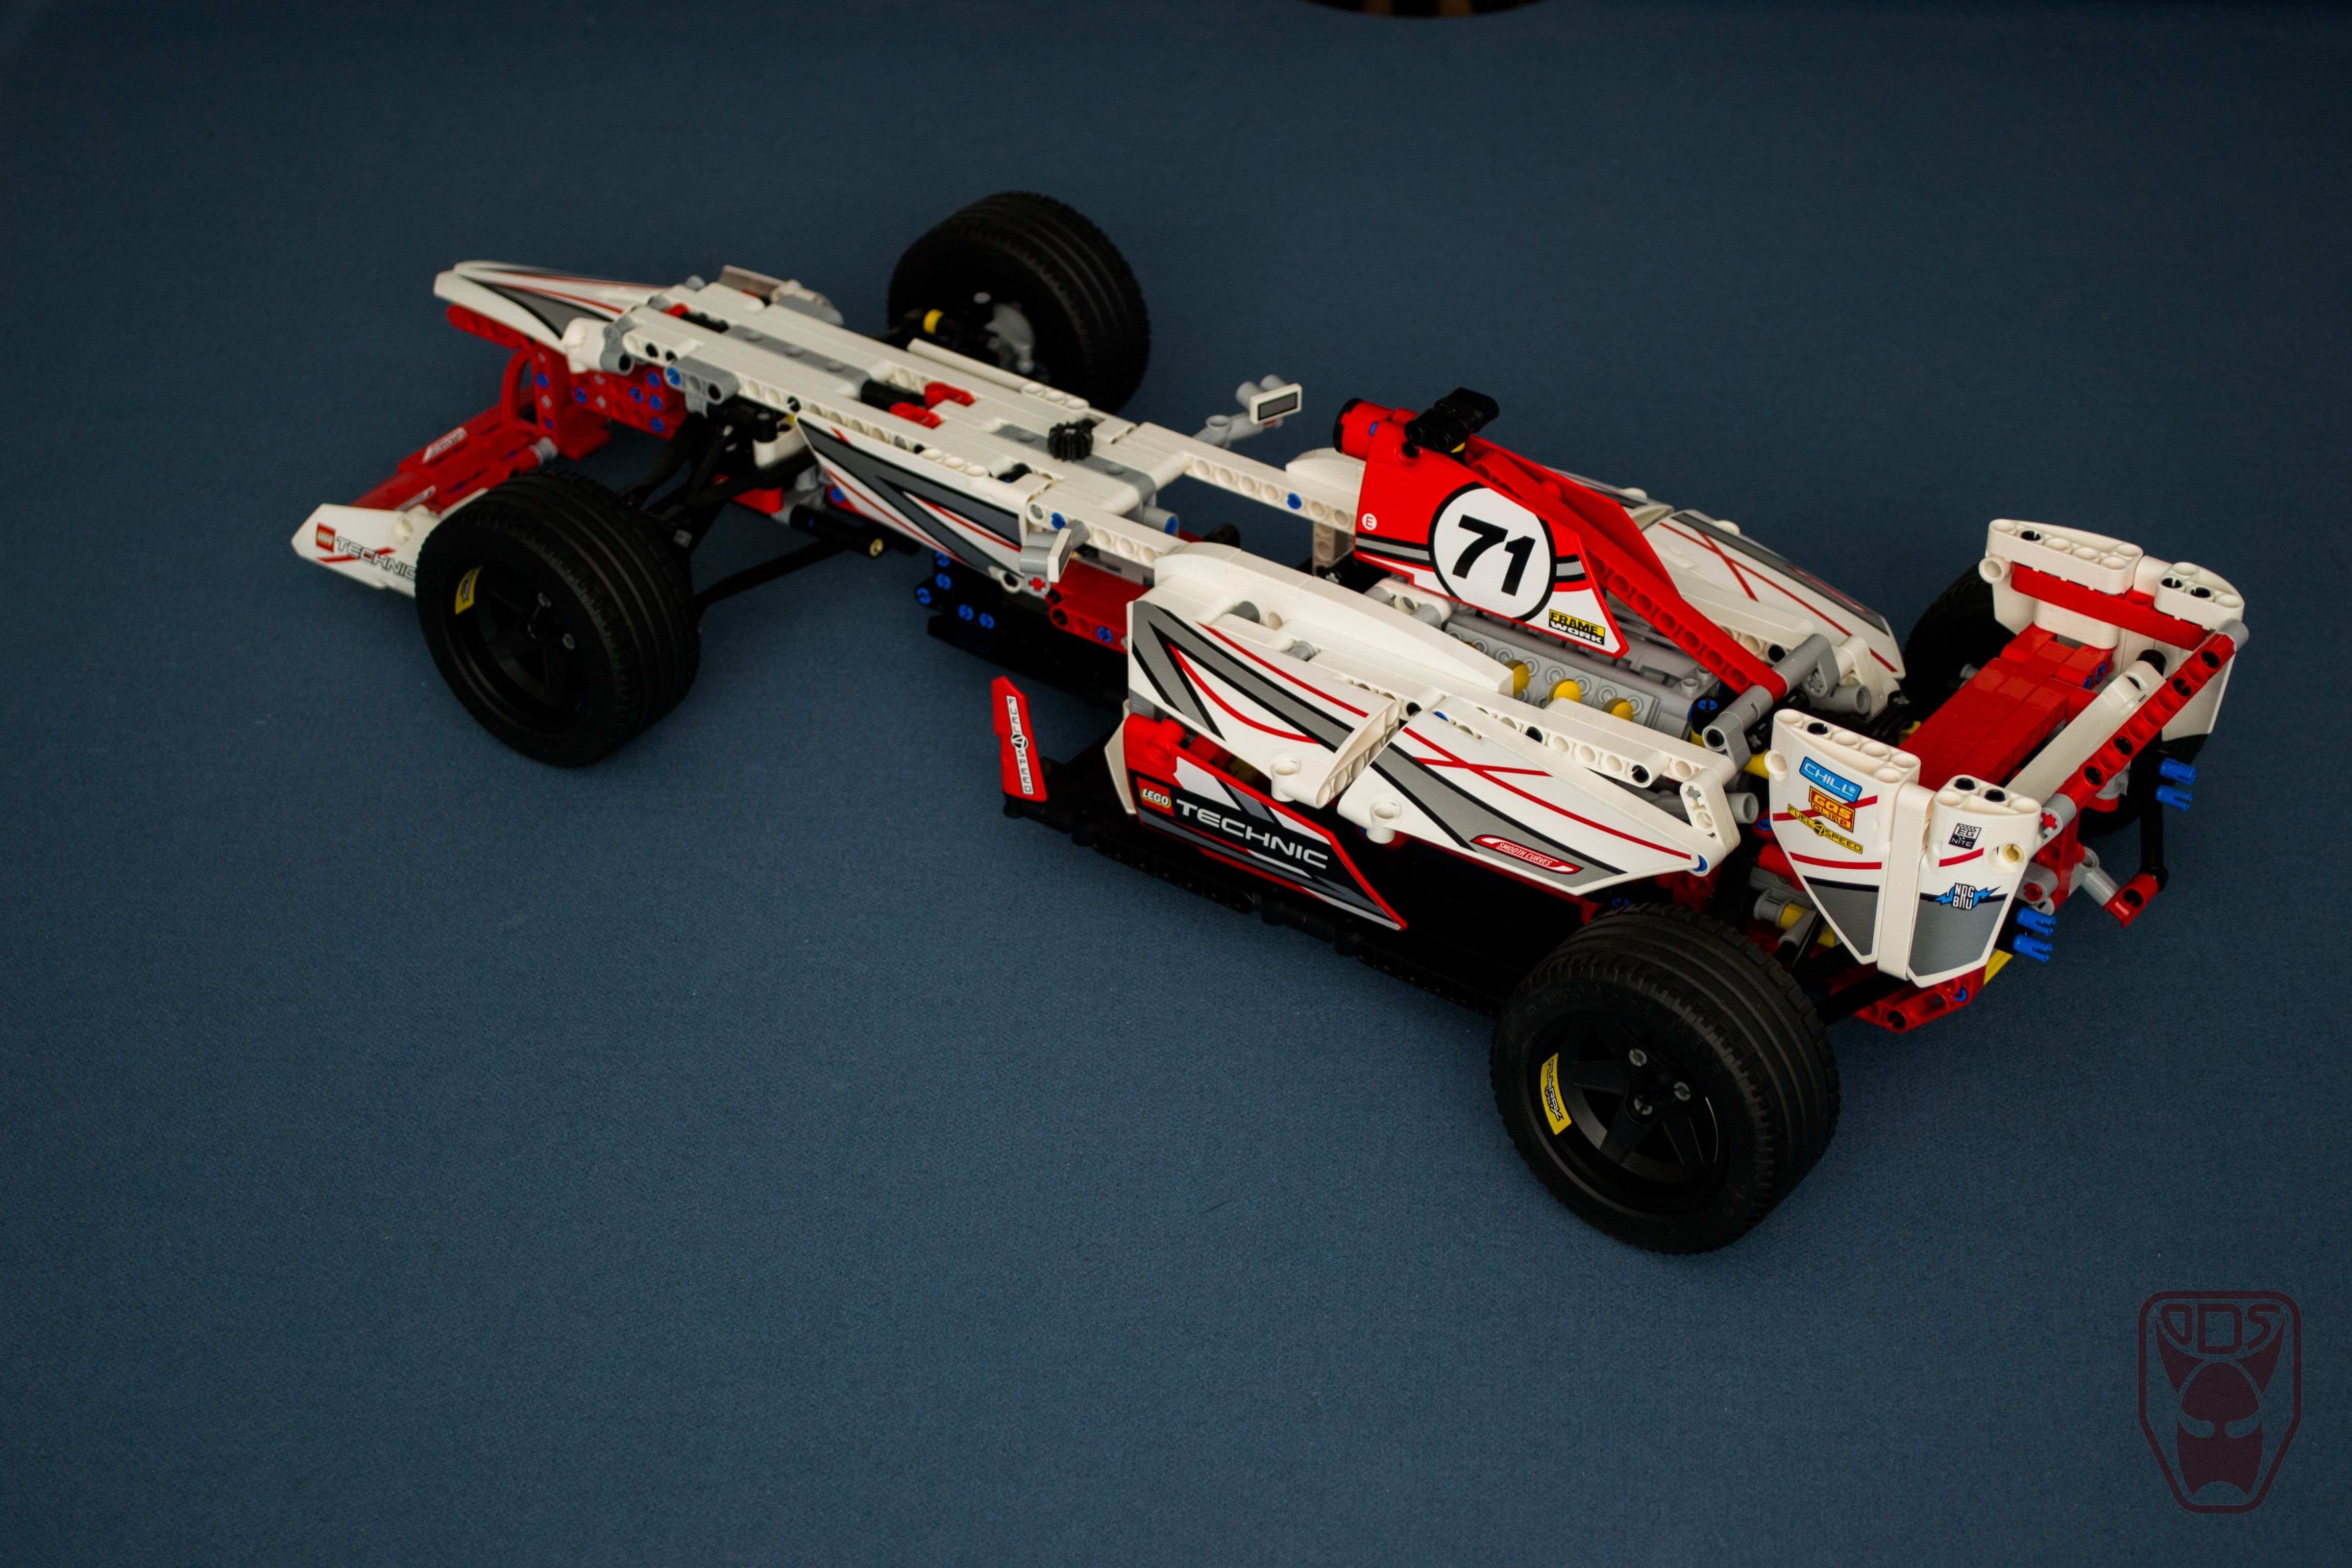 Lego F1 car complete. Vroom & BOOM!